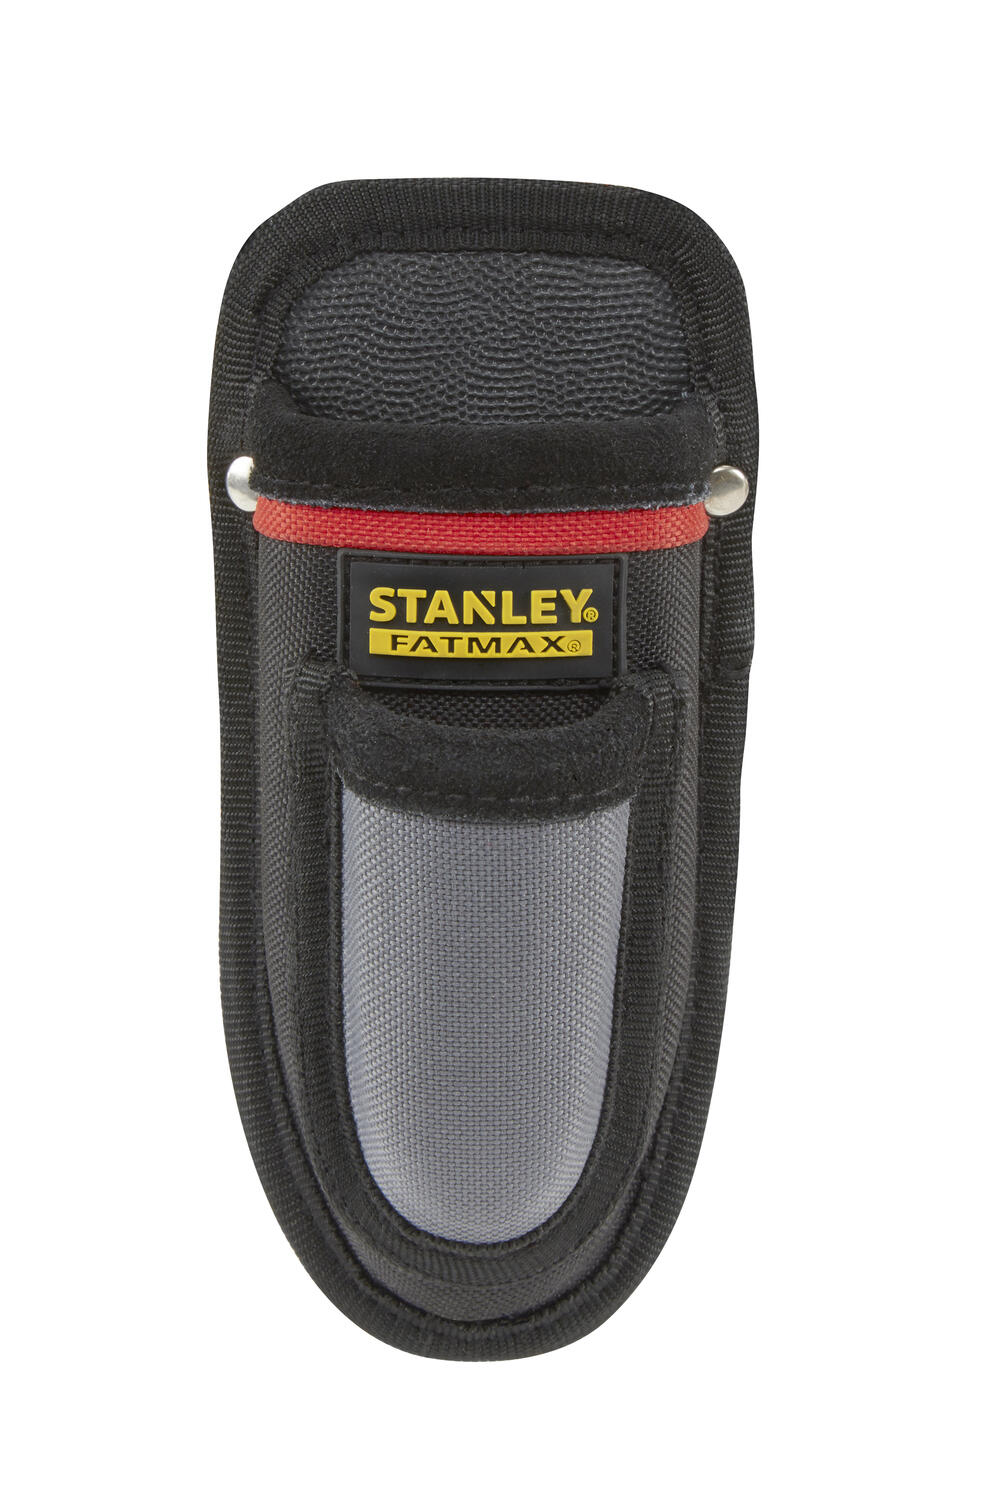 Pouzdro na nůž Stanley 0-10-028